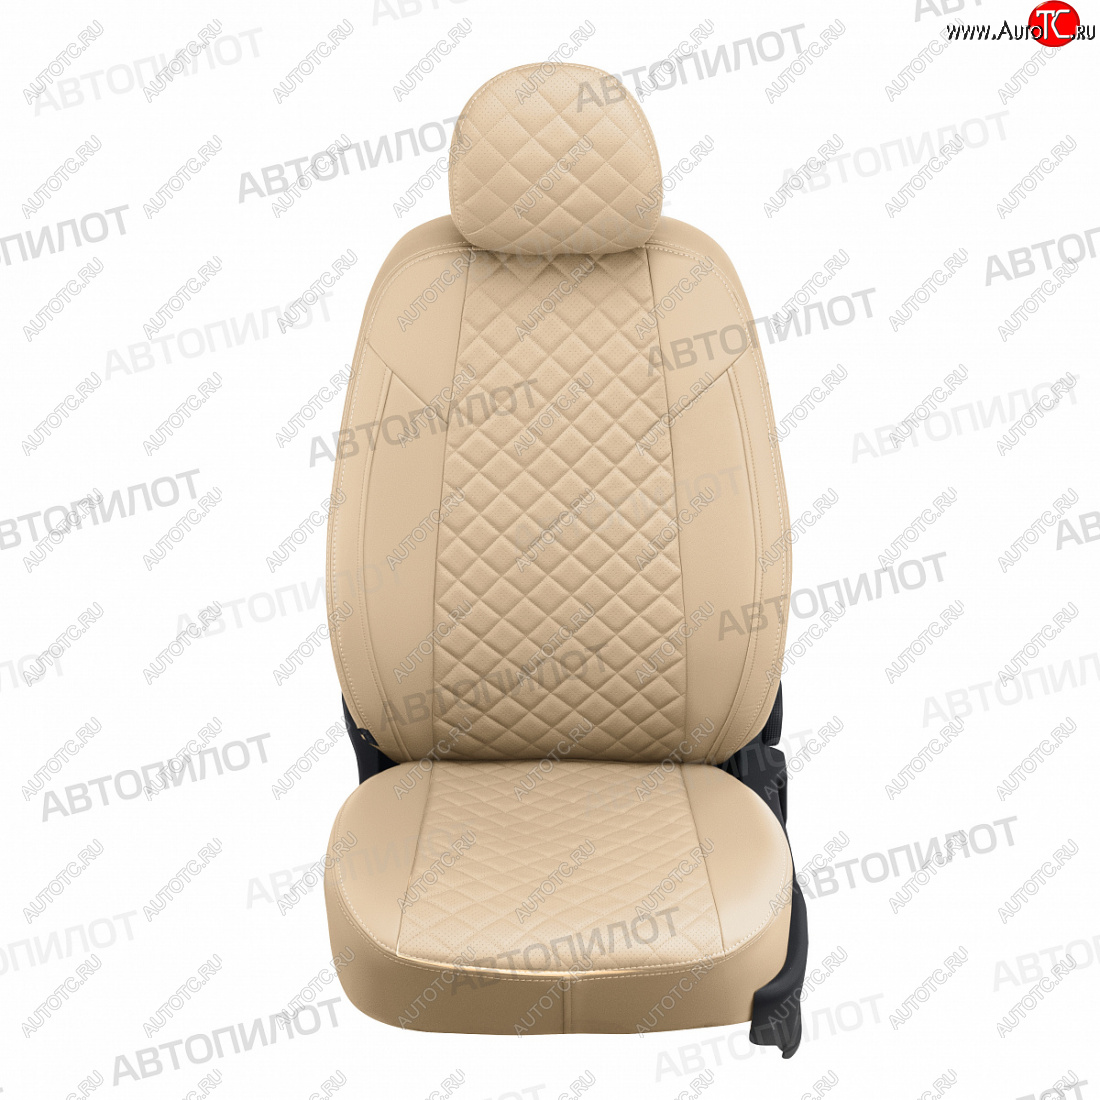 13 999 р. Чехлы сидений (экокожа) Автопилот Ромб  Honda HR-V  GH3, GH4 (1998-2005) (бежевый)